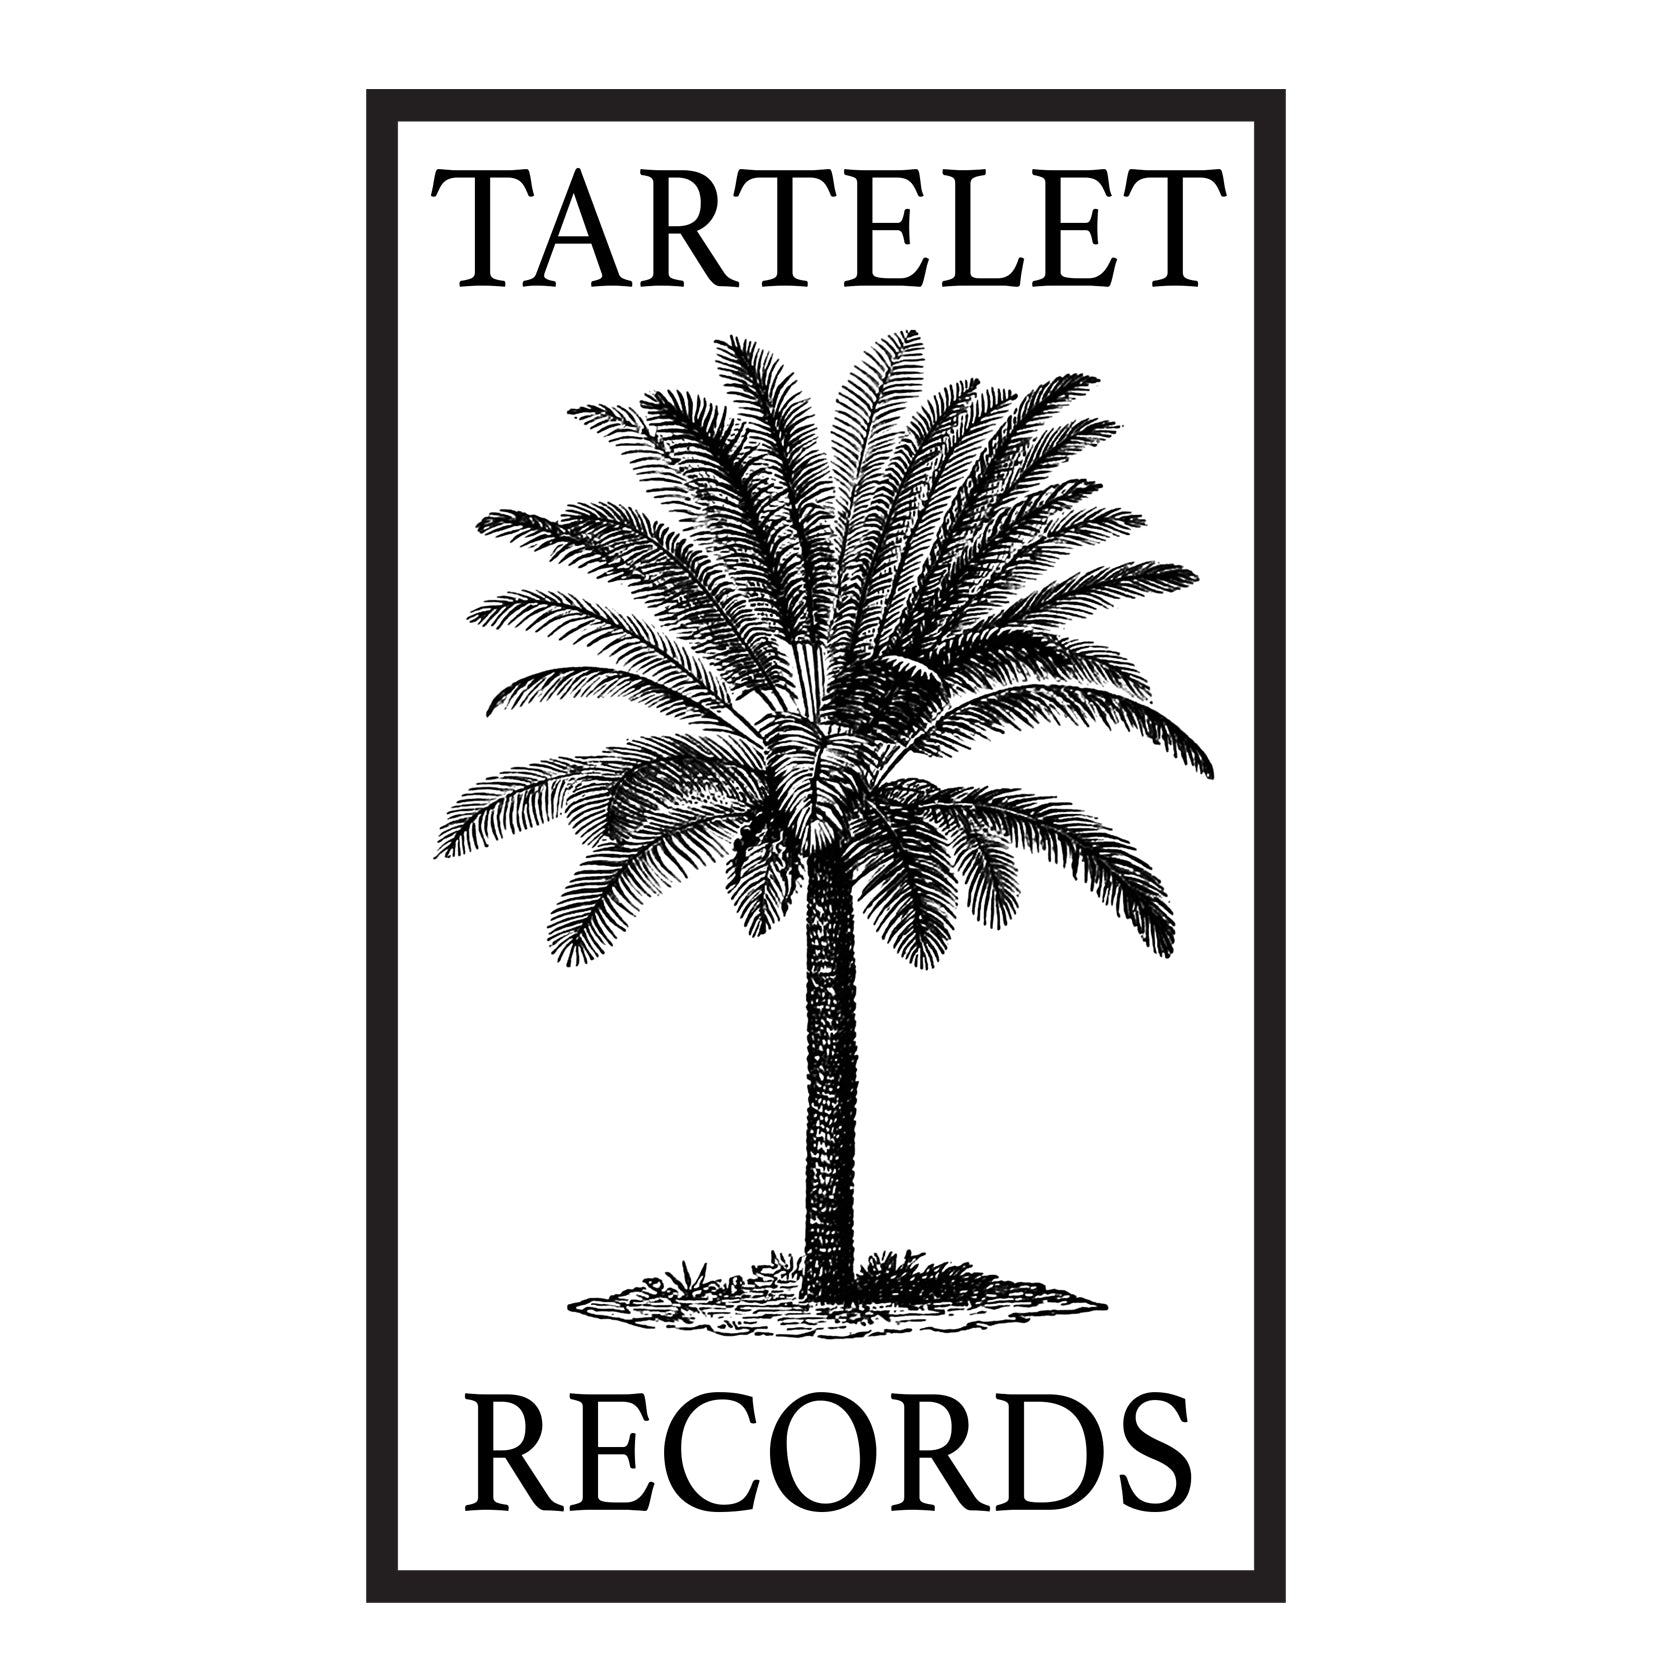 Label Feature: Tartelet Records